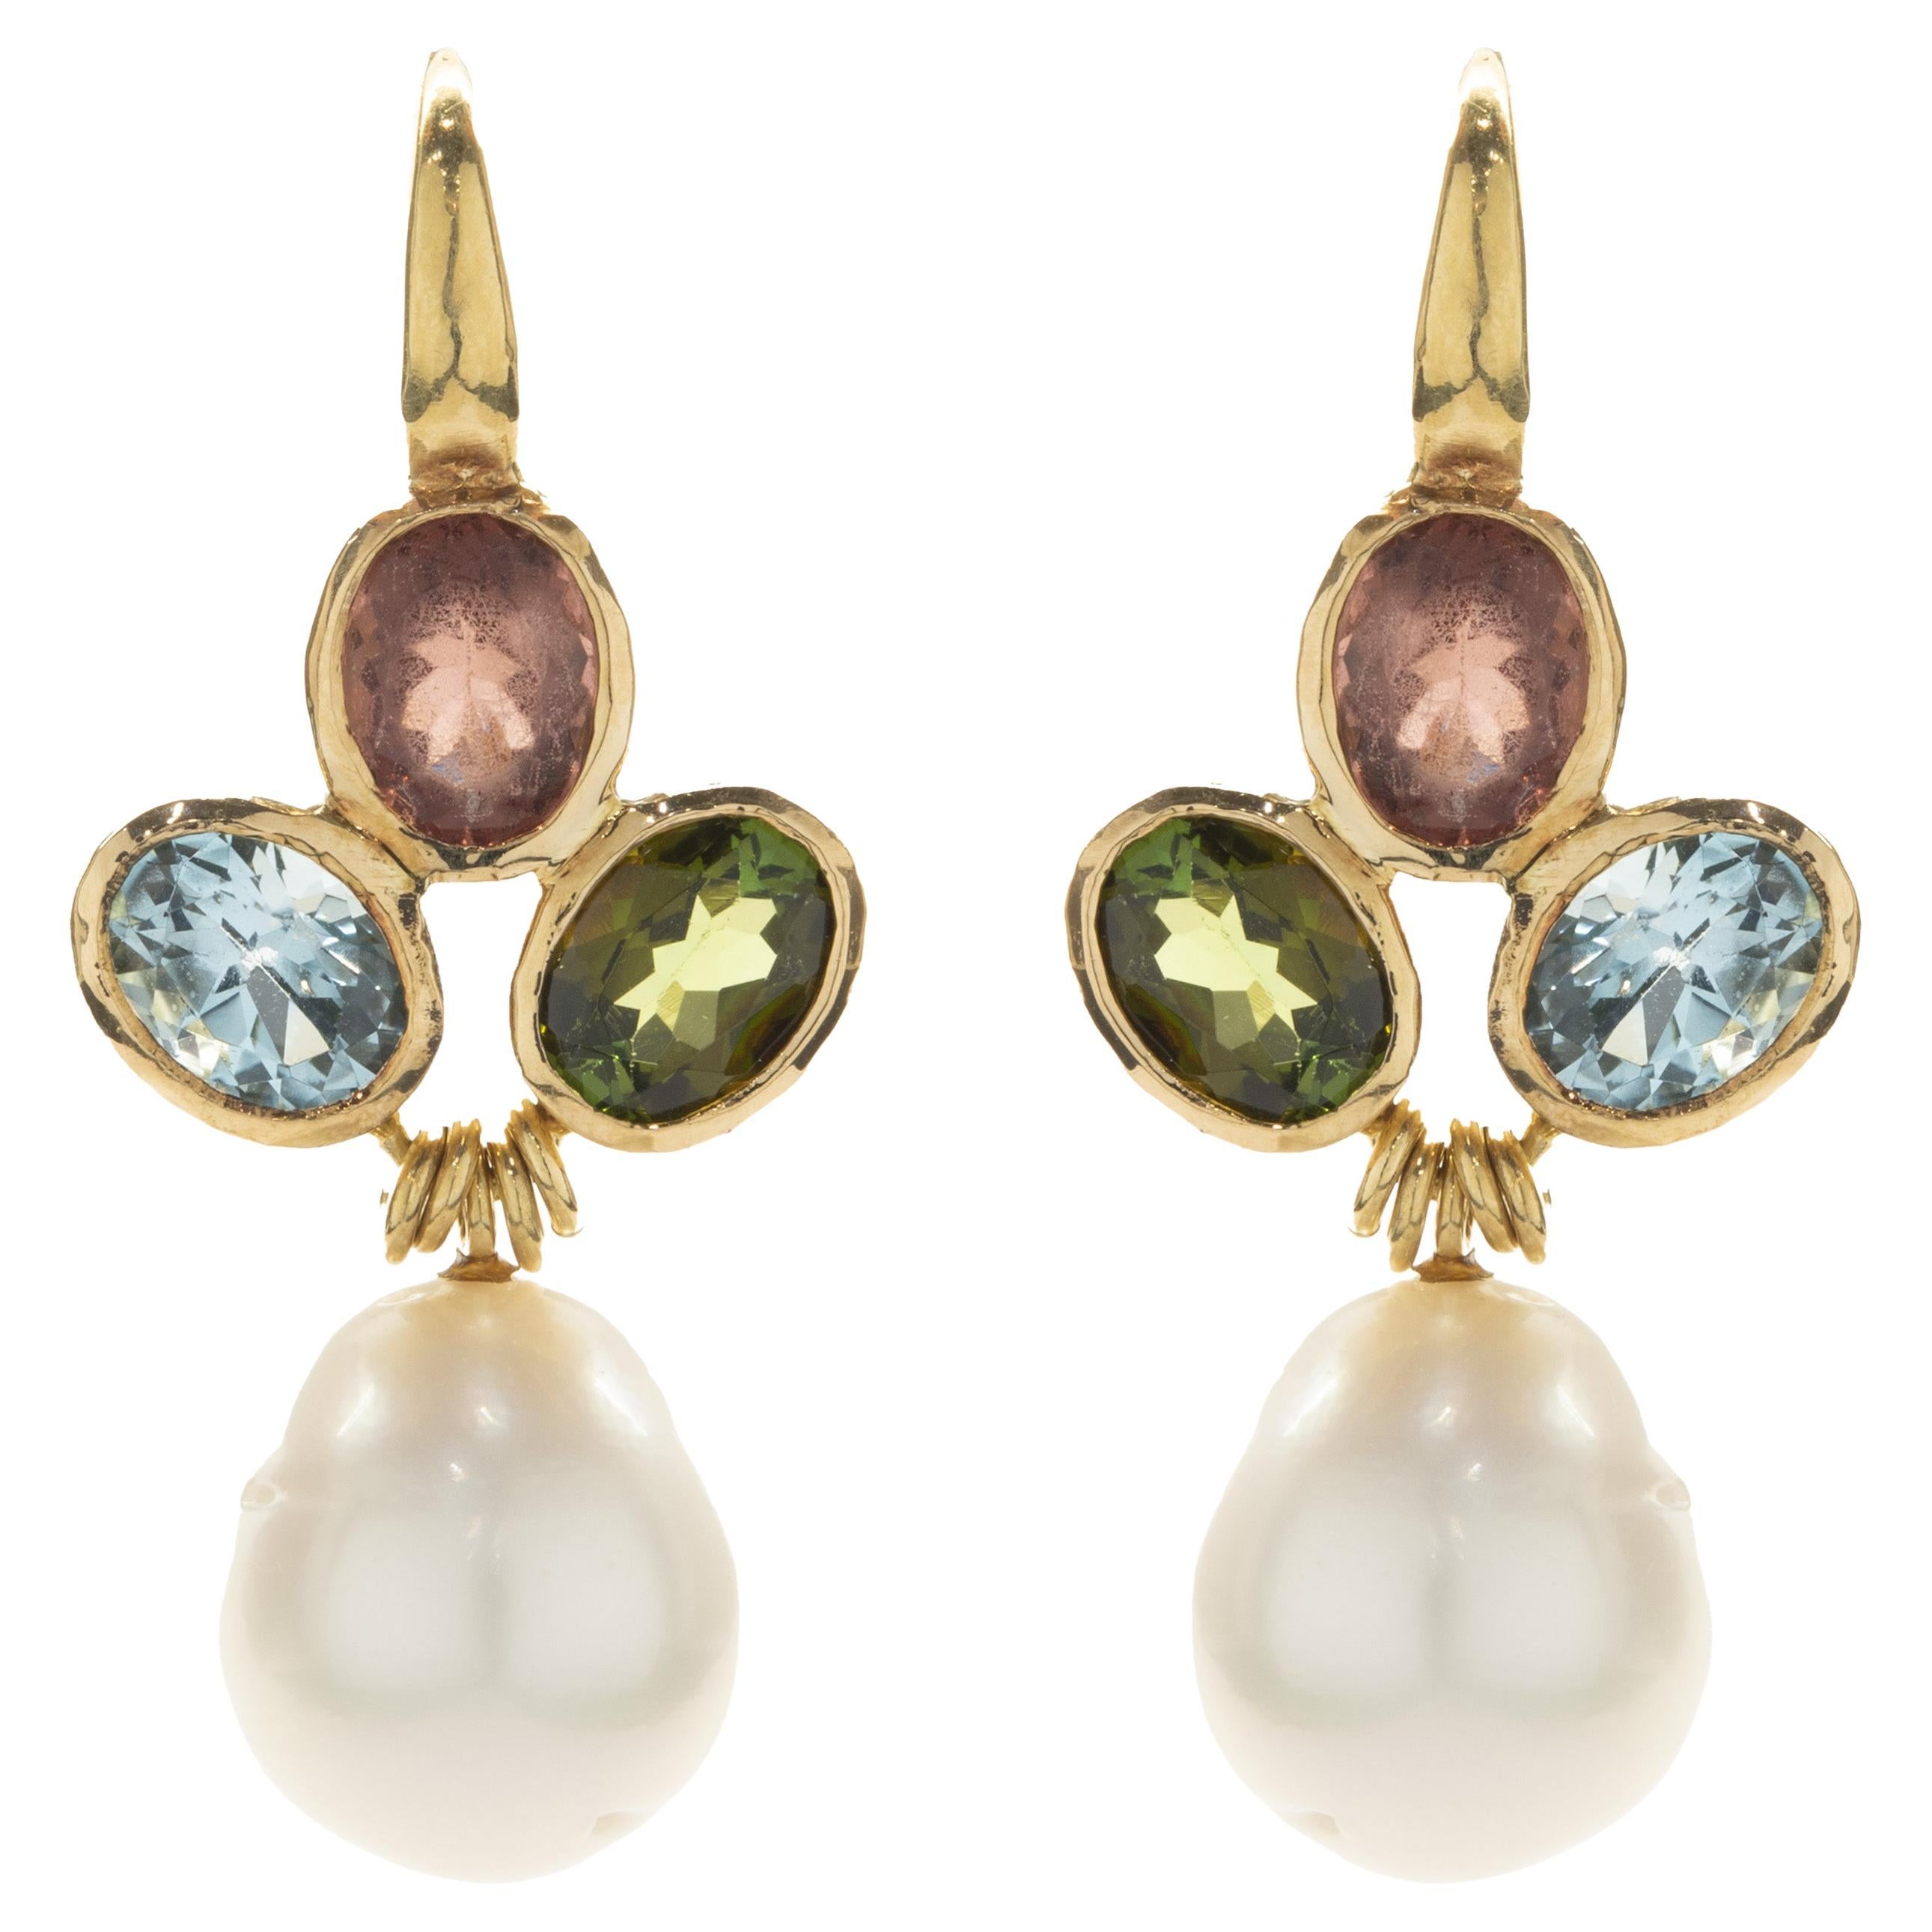 18 Karat Yellow Gold Multi Colored Gemstone and South Sea Pearl Drop Earrings